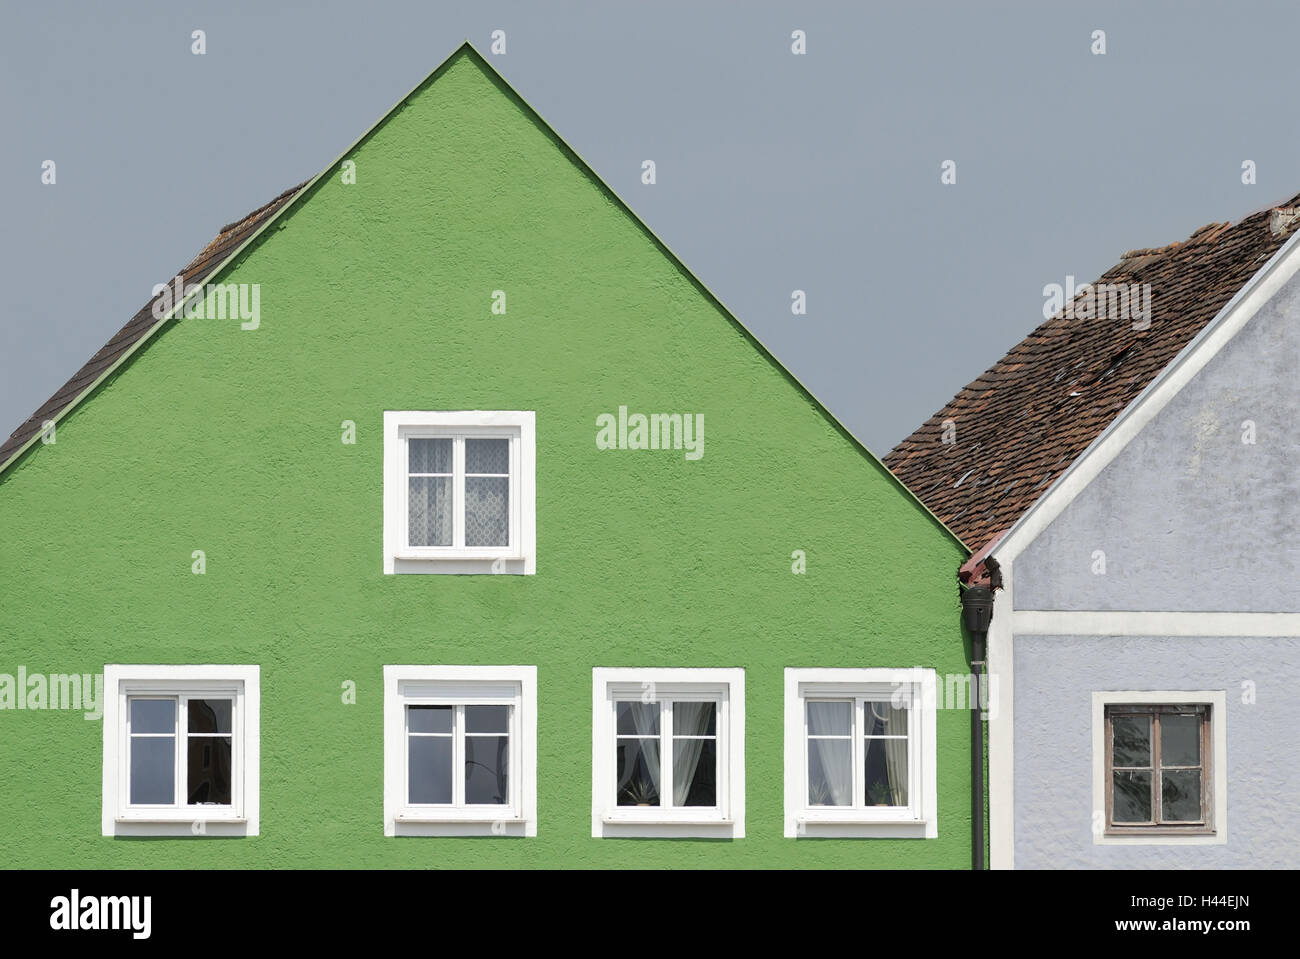 Häuser, Giebel, Fenster, Dächer, Himmel, grün, weiß, grau, Stockfoto